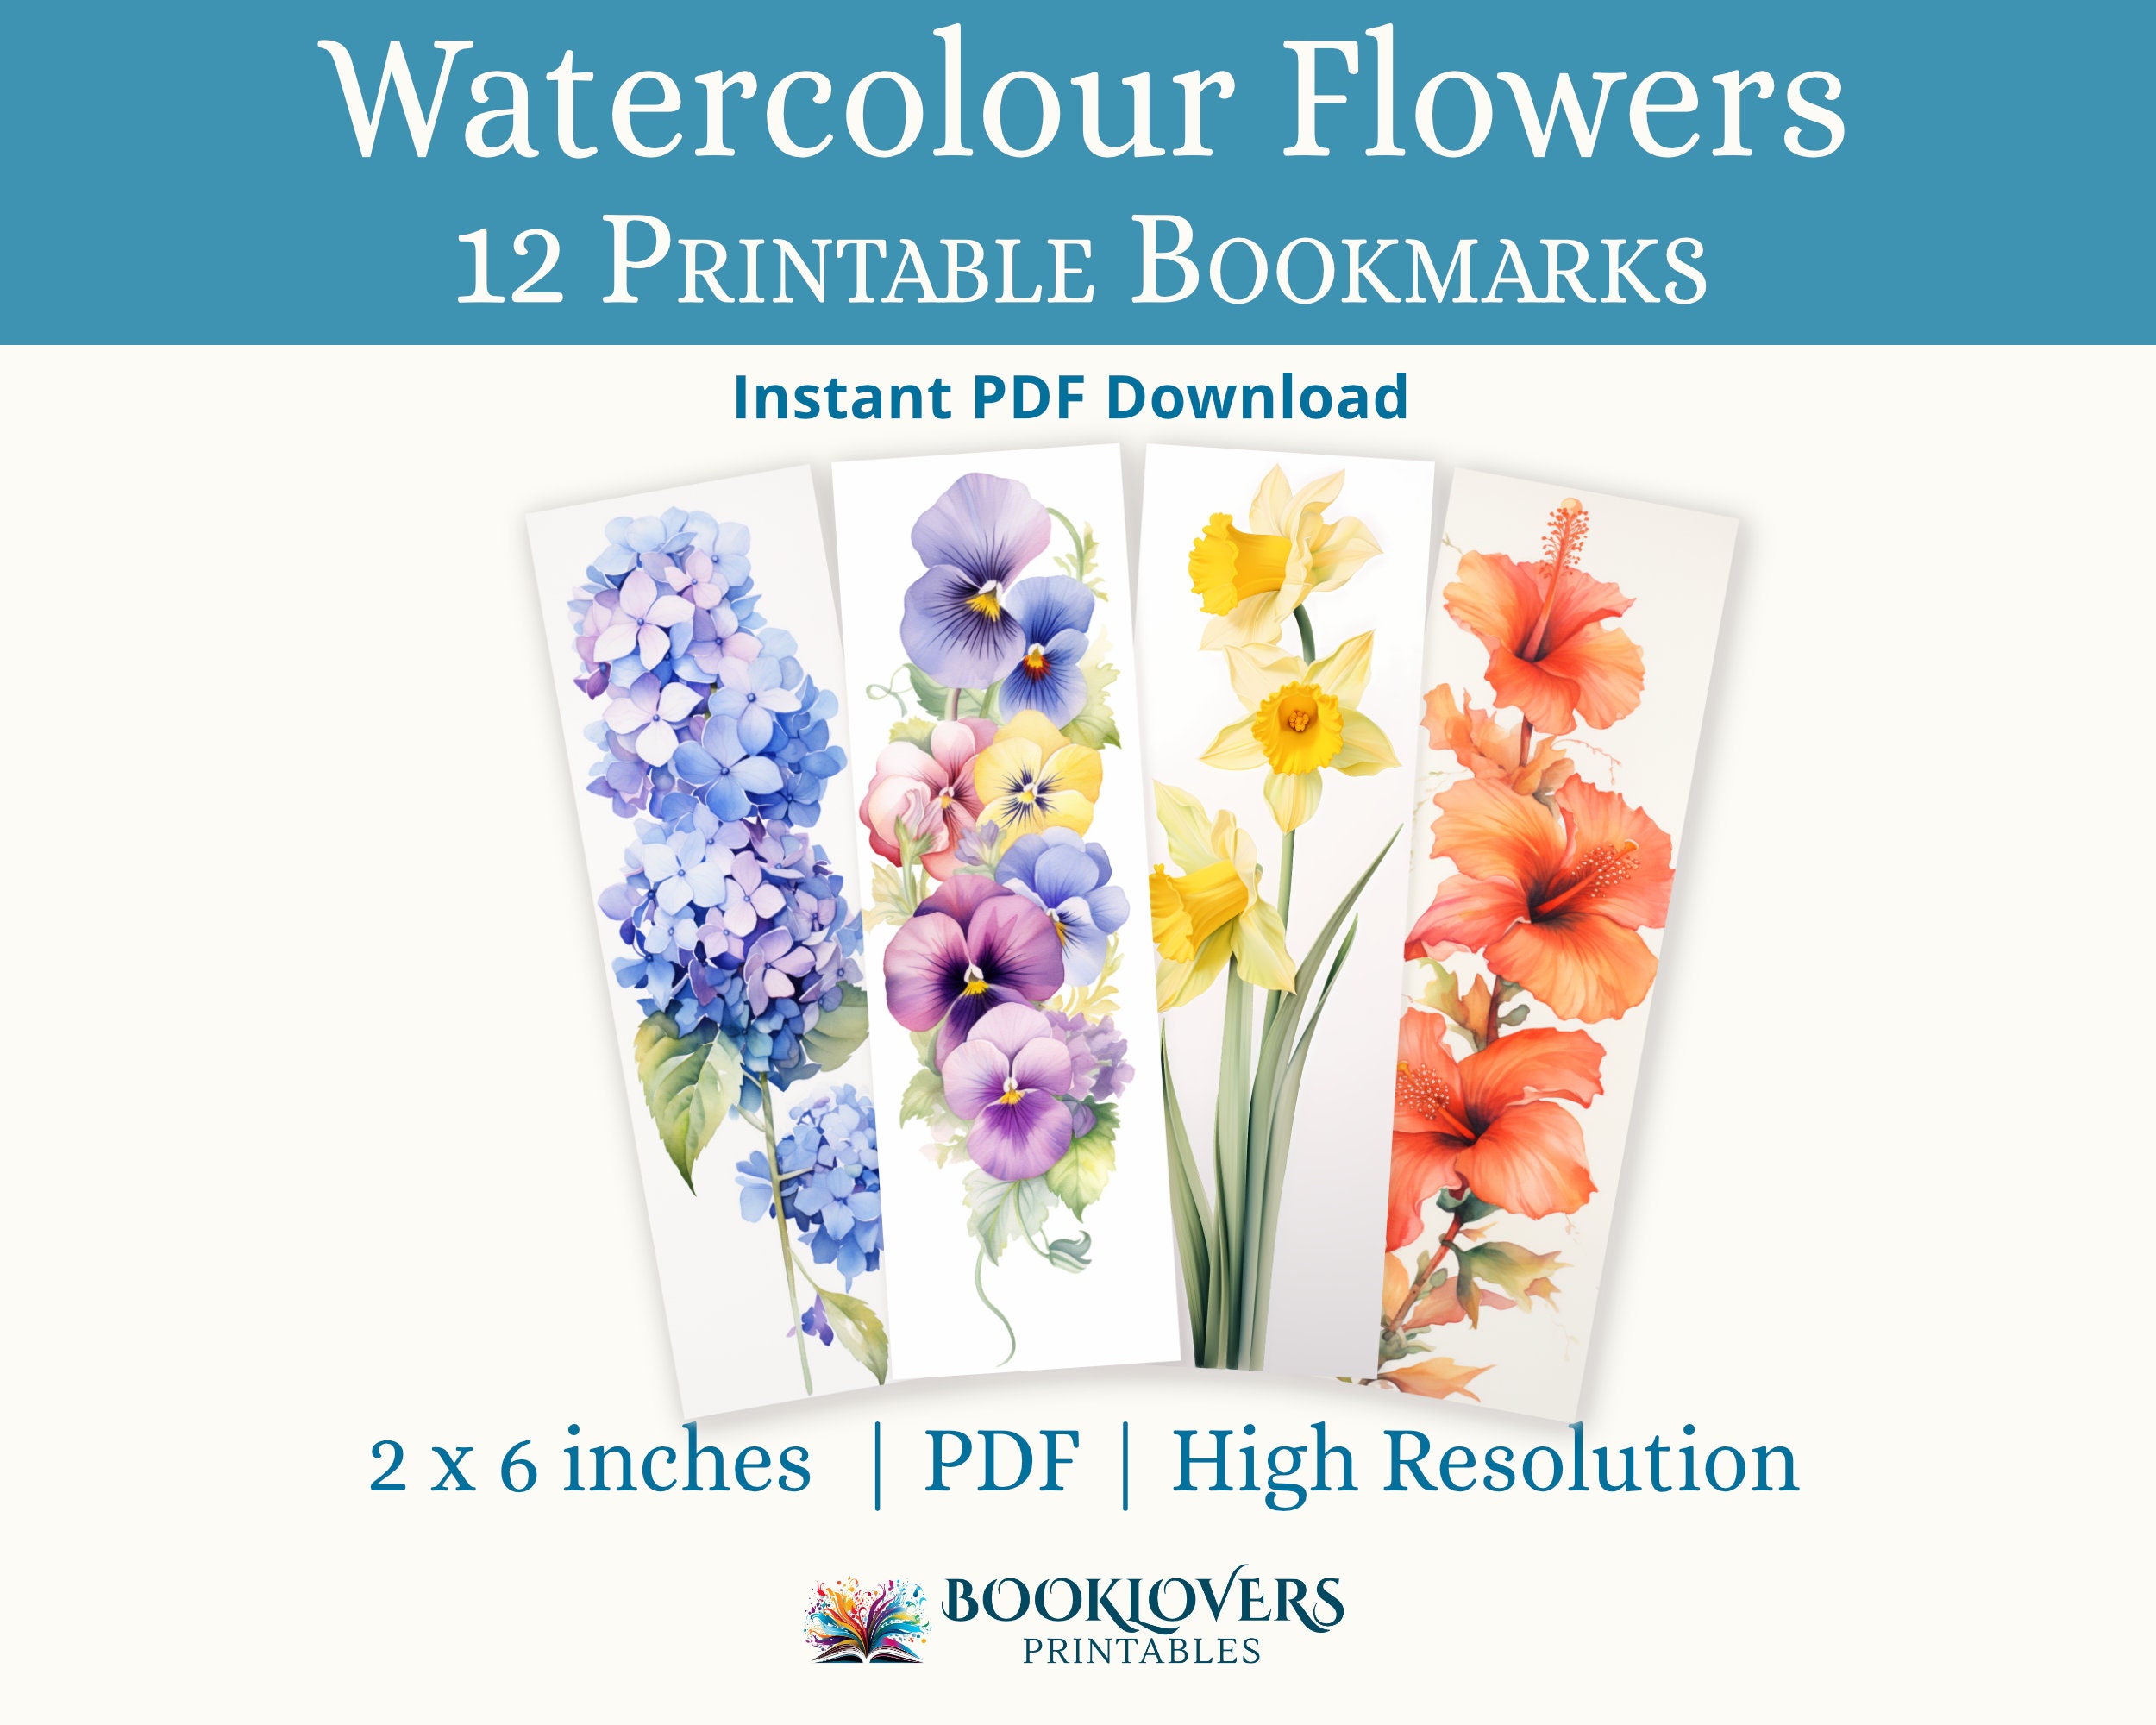 Edible Flowers: Chart / Poster / Food / Illustrations / Art Print / Home  Decor / Flower / Pansy / Violet / Nasturtium / Rose / Squashblossom 